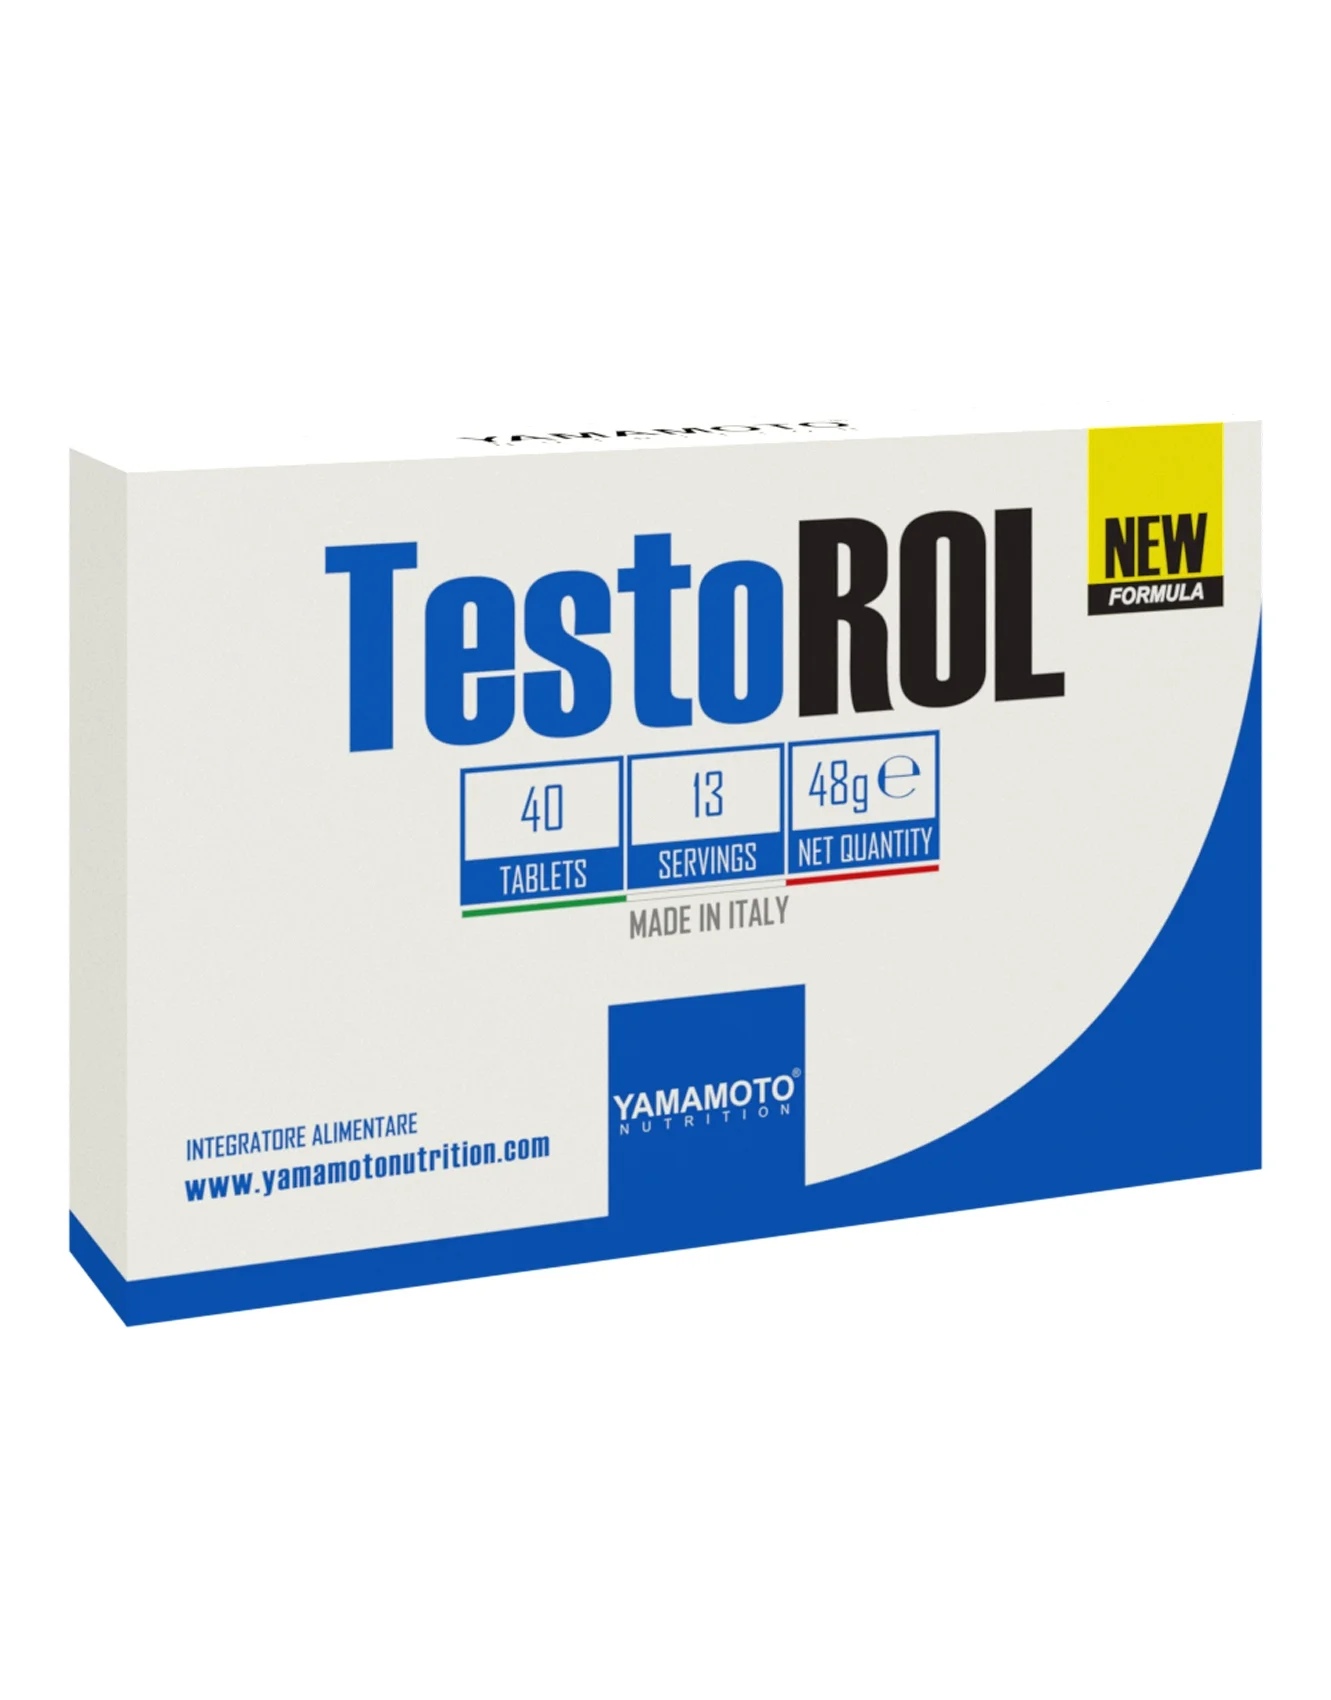 Yamamoto Nutrition TestoROL NEW 40 tablets / 48 g / 14 doses